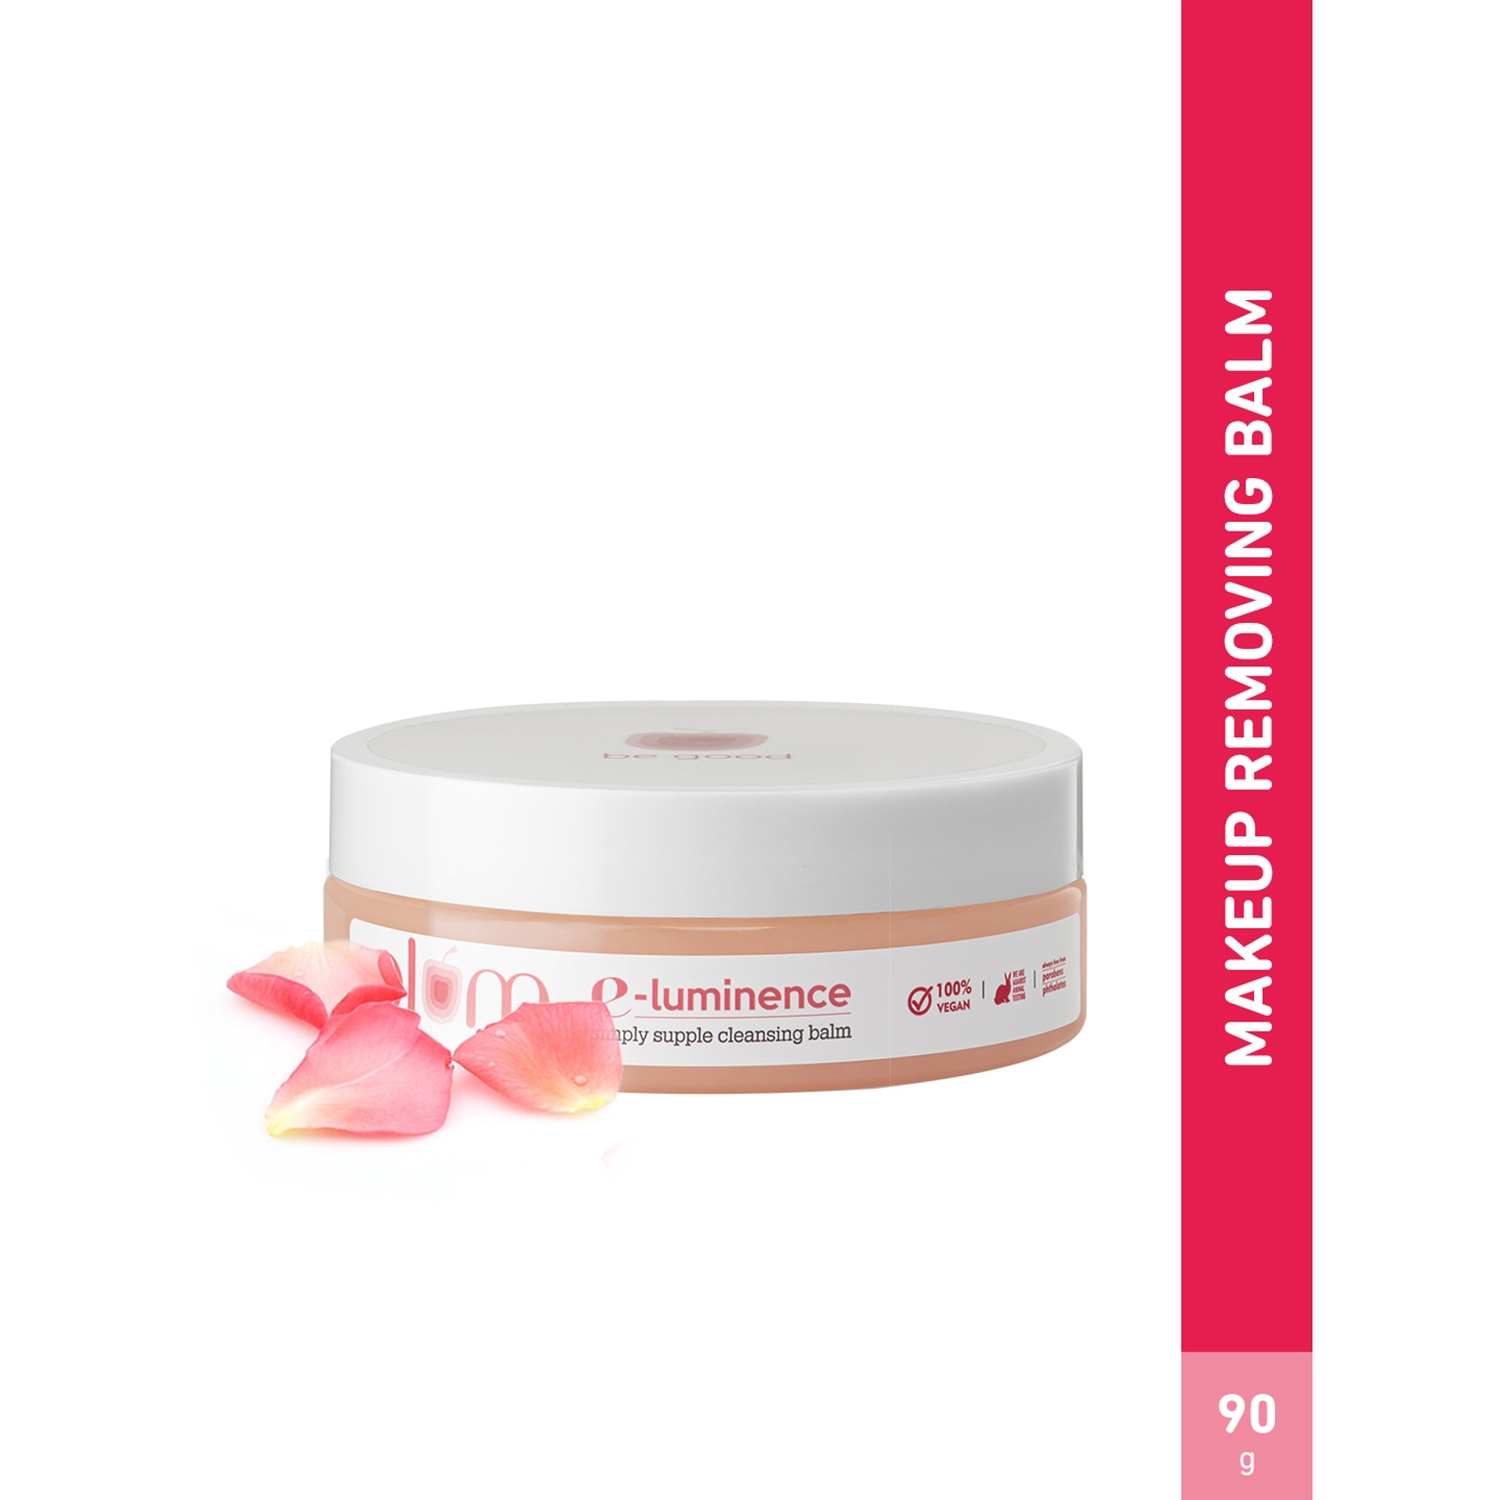 Plum | Plum E-Luminence Supple Cleansing Balm, Non-Drying Face, Lip & Eye Waterproof Makeup Remover (90g)